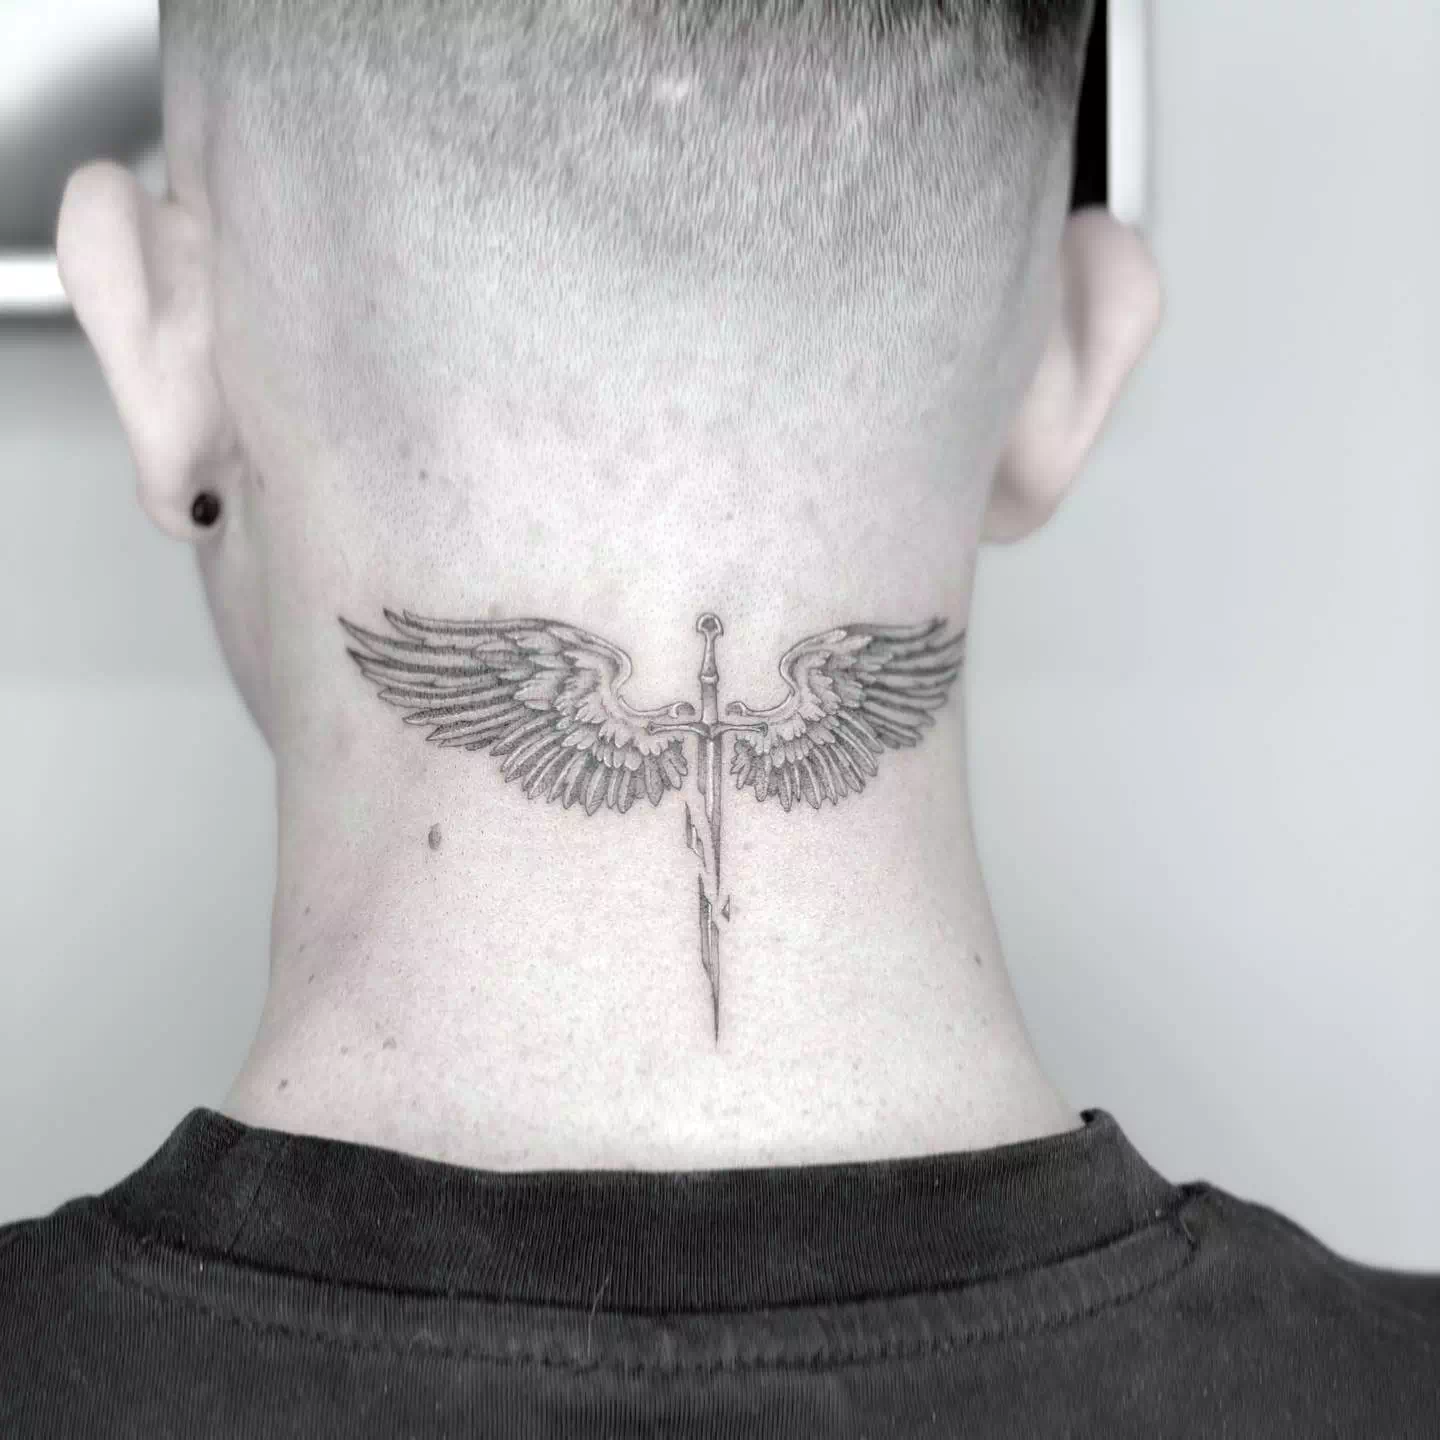 Wing neck tattoo 5